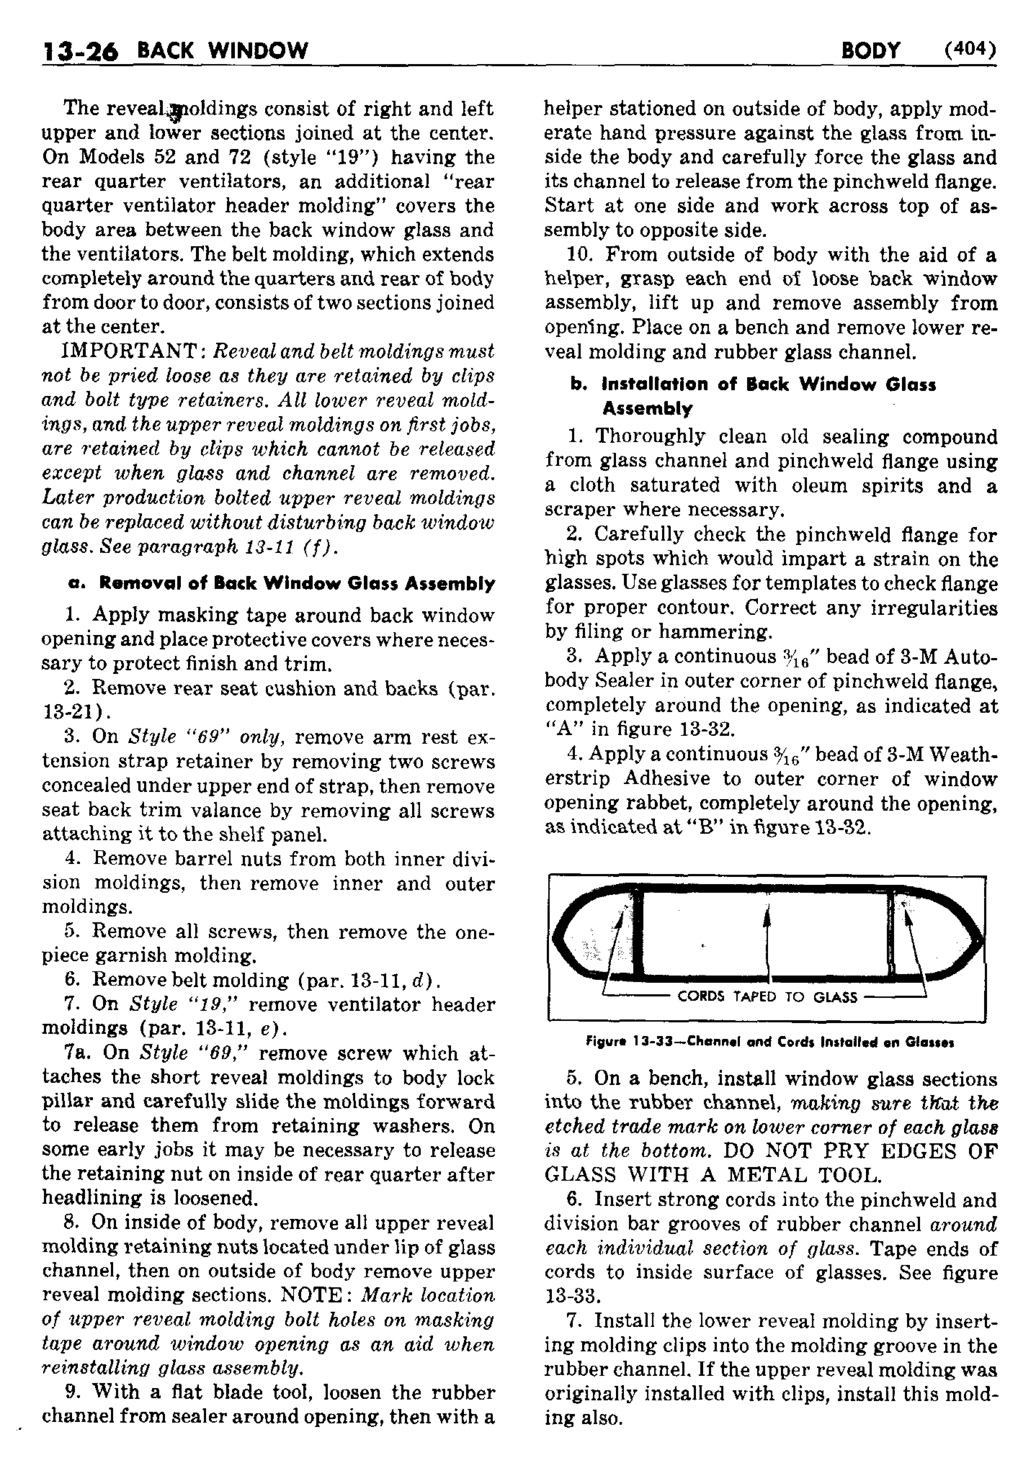 n_14 1950 Buick Shop Manual - Body-026-026.jpg